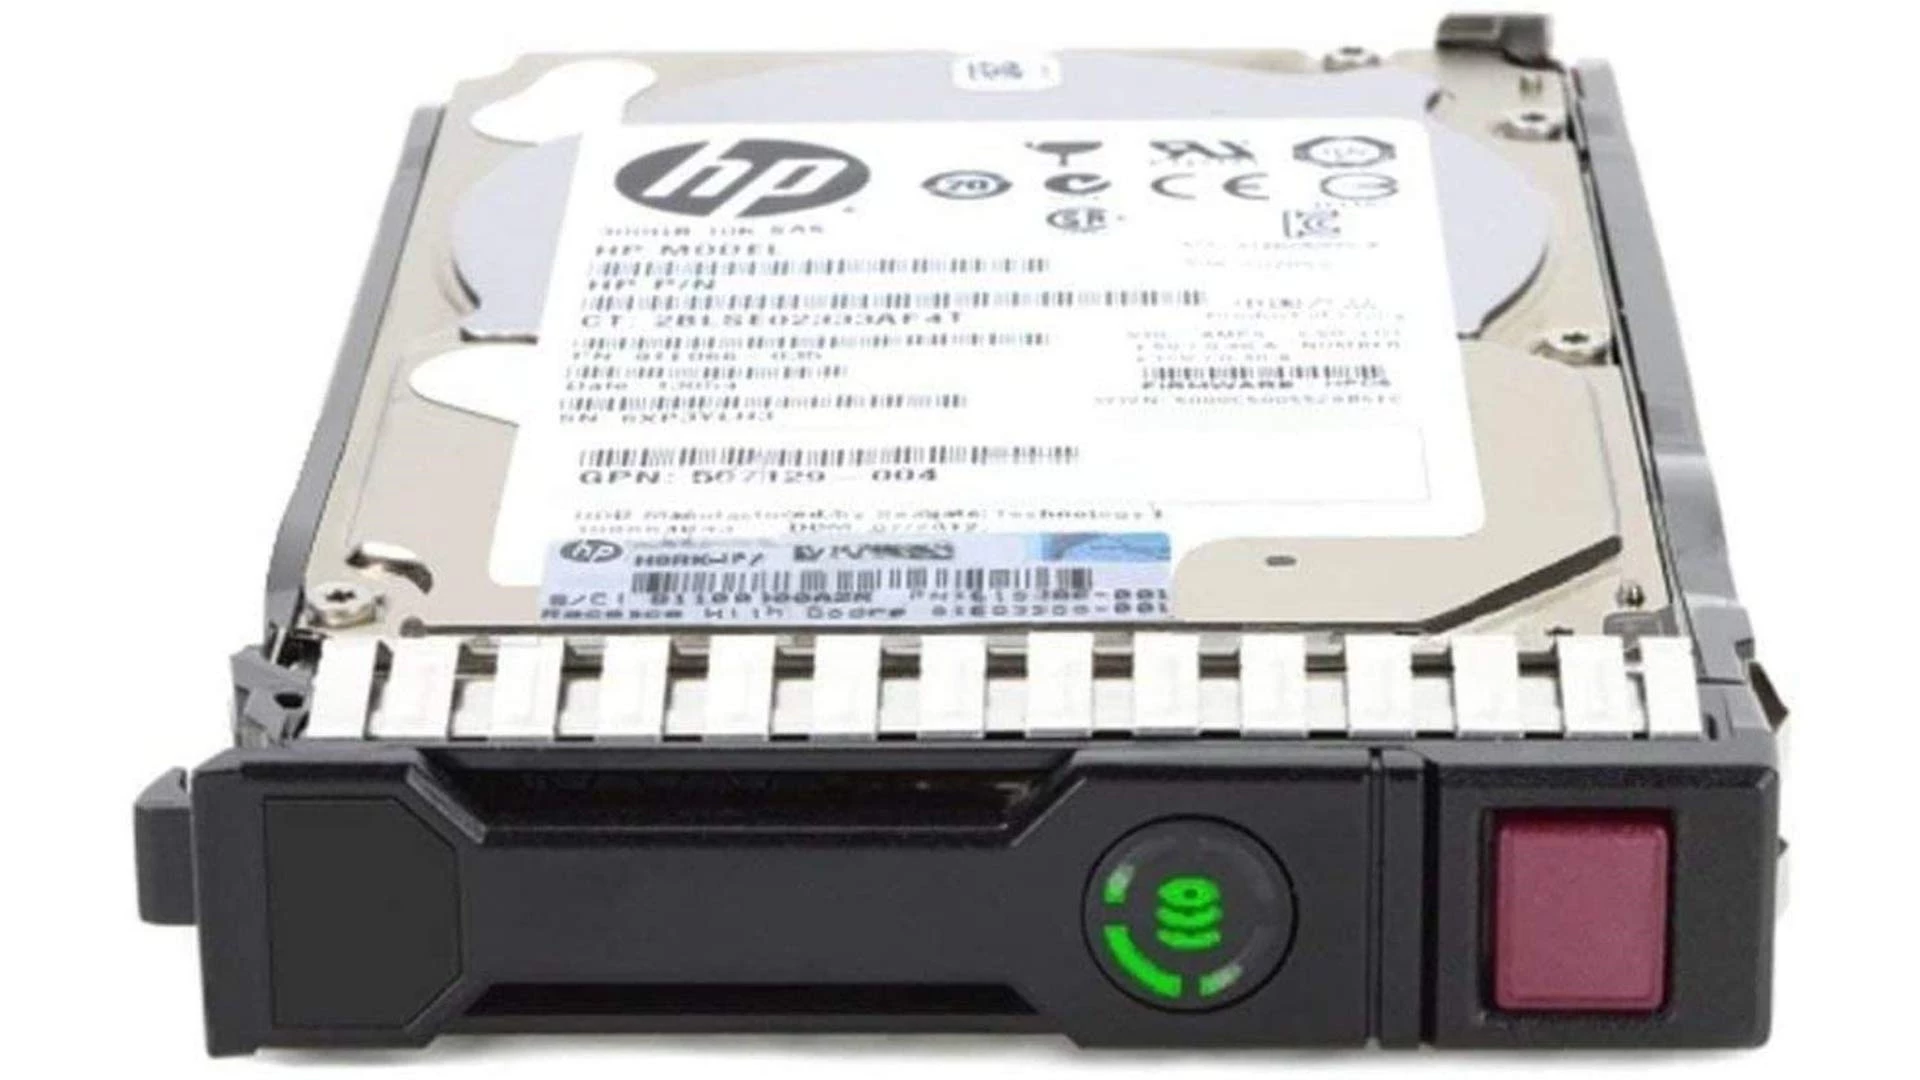 HPE 2.4Tb 2.5" SAS Enterprise Server Hard Drive (10000rpm SAS 12Gb/S) #881457-b21